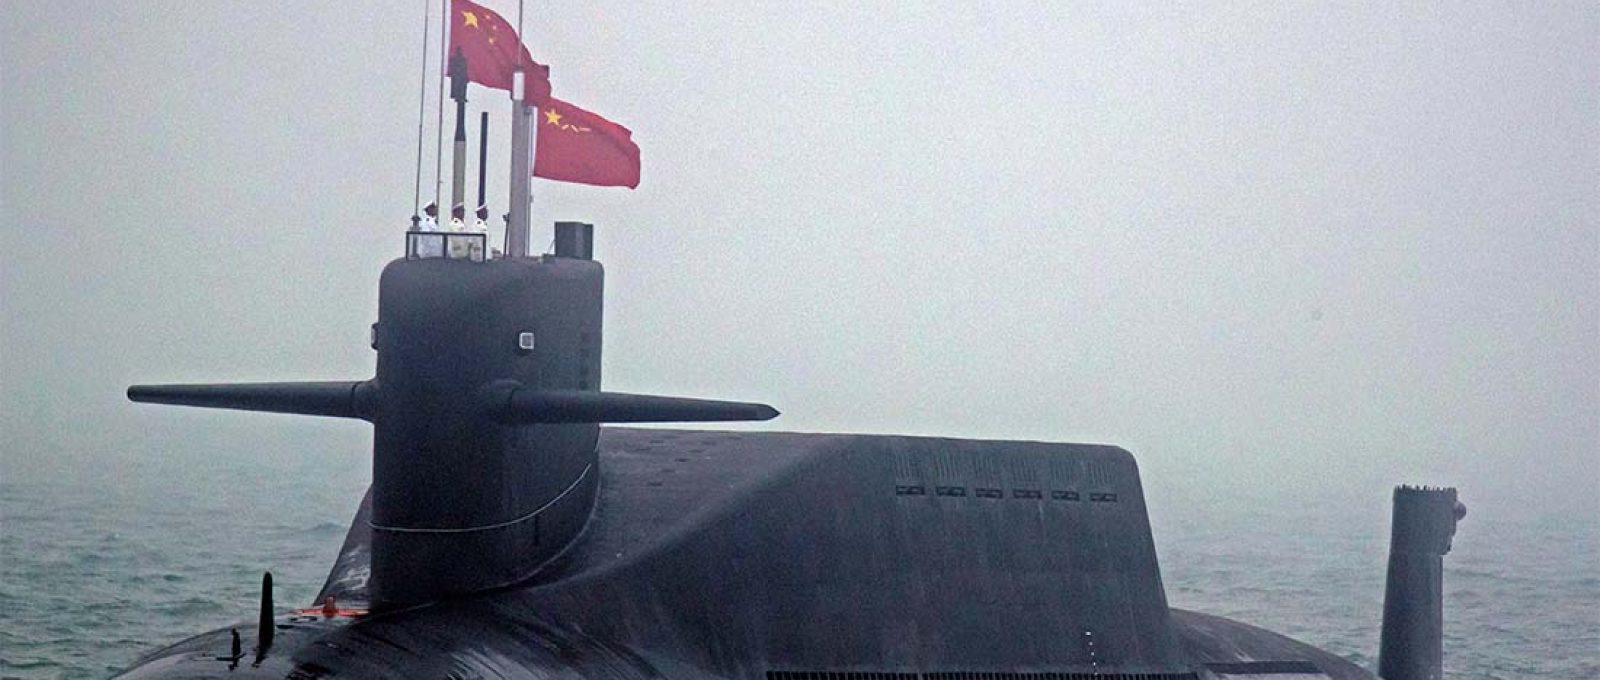 Submarino nuclear chinês da classe Jin navega perto de Qingdao, província de Shandong, 23 de abril de 2019 (Mark Schiefelbein/AFP via Getty Images).